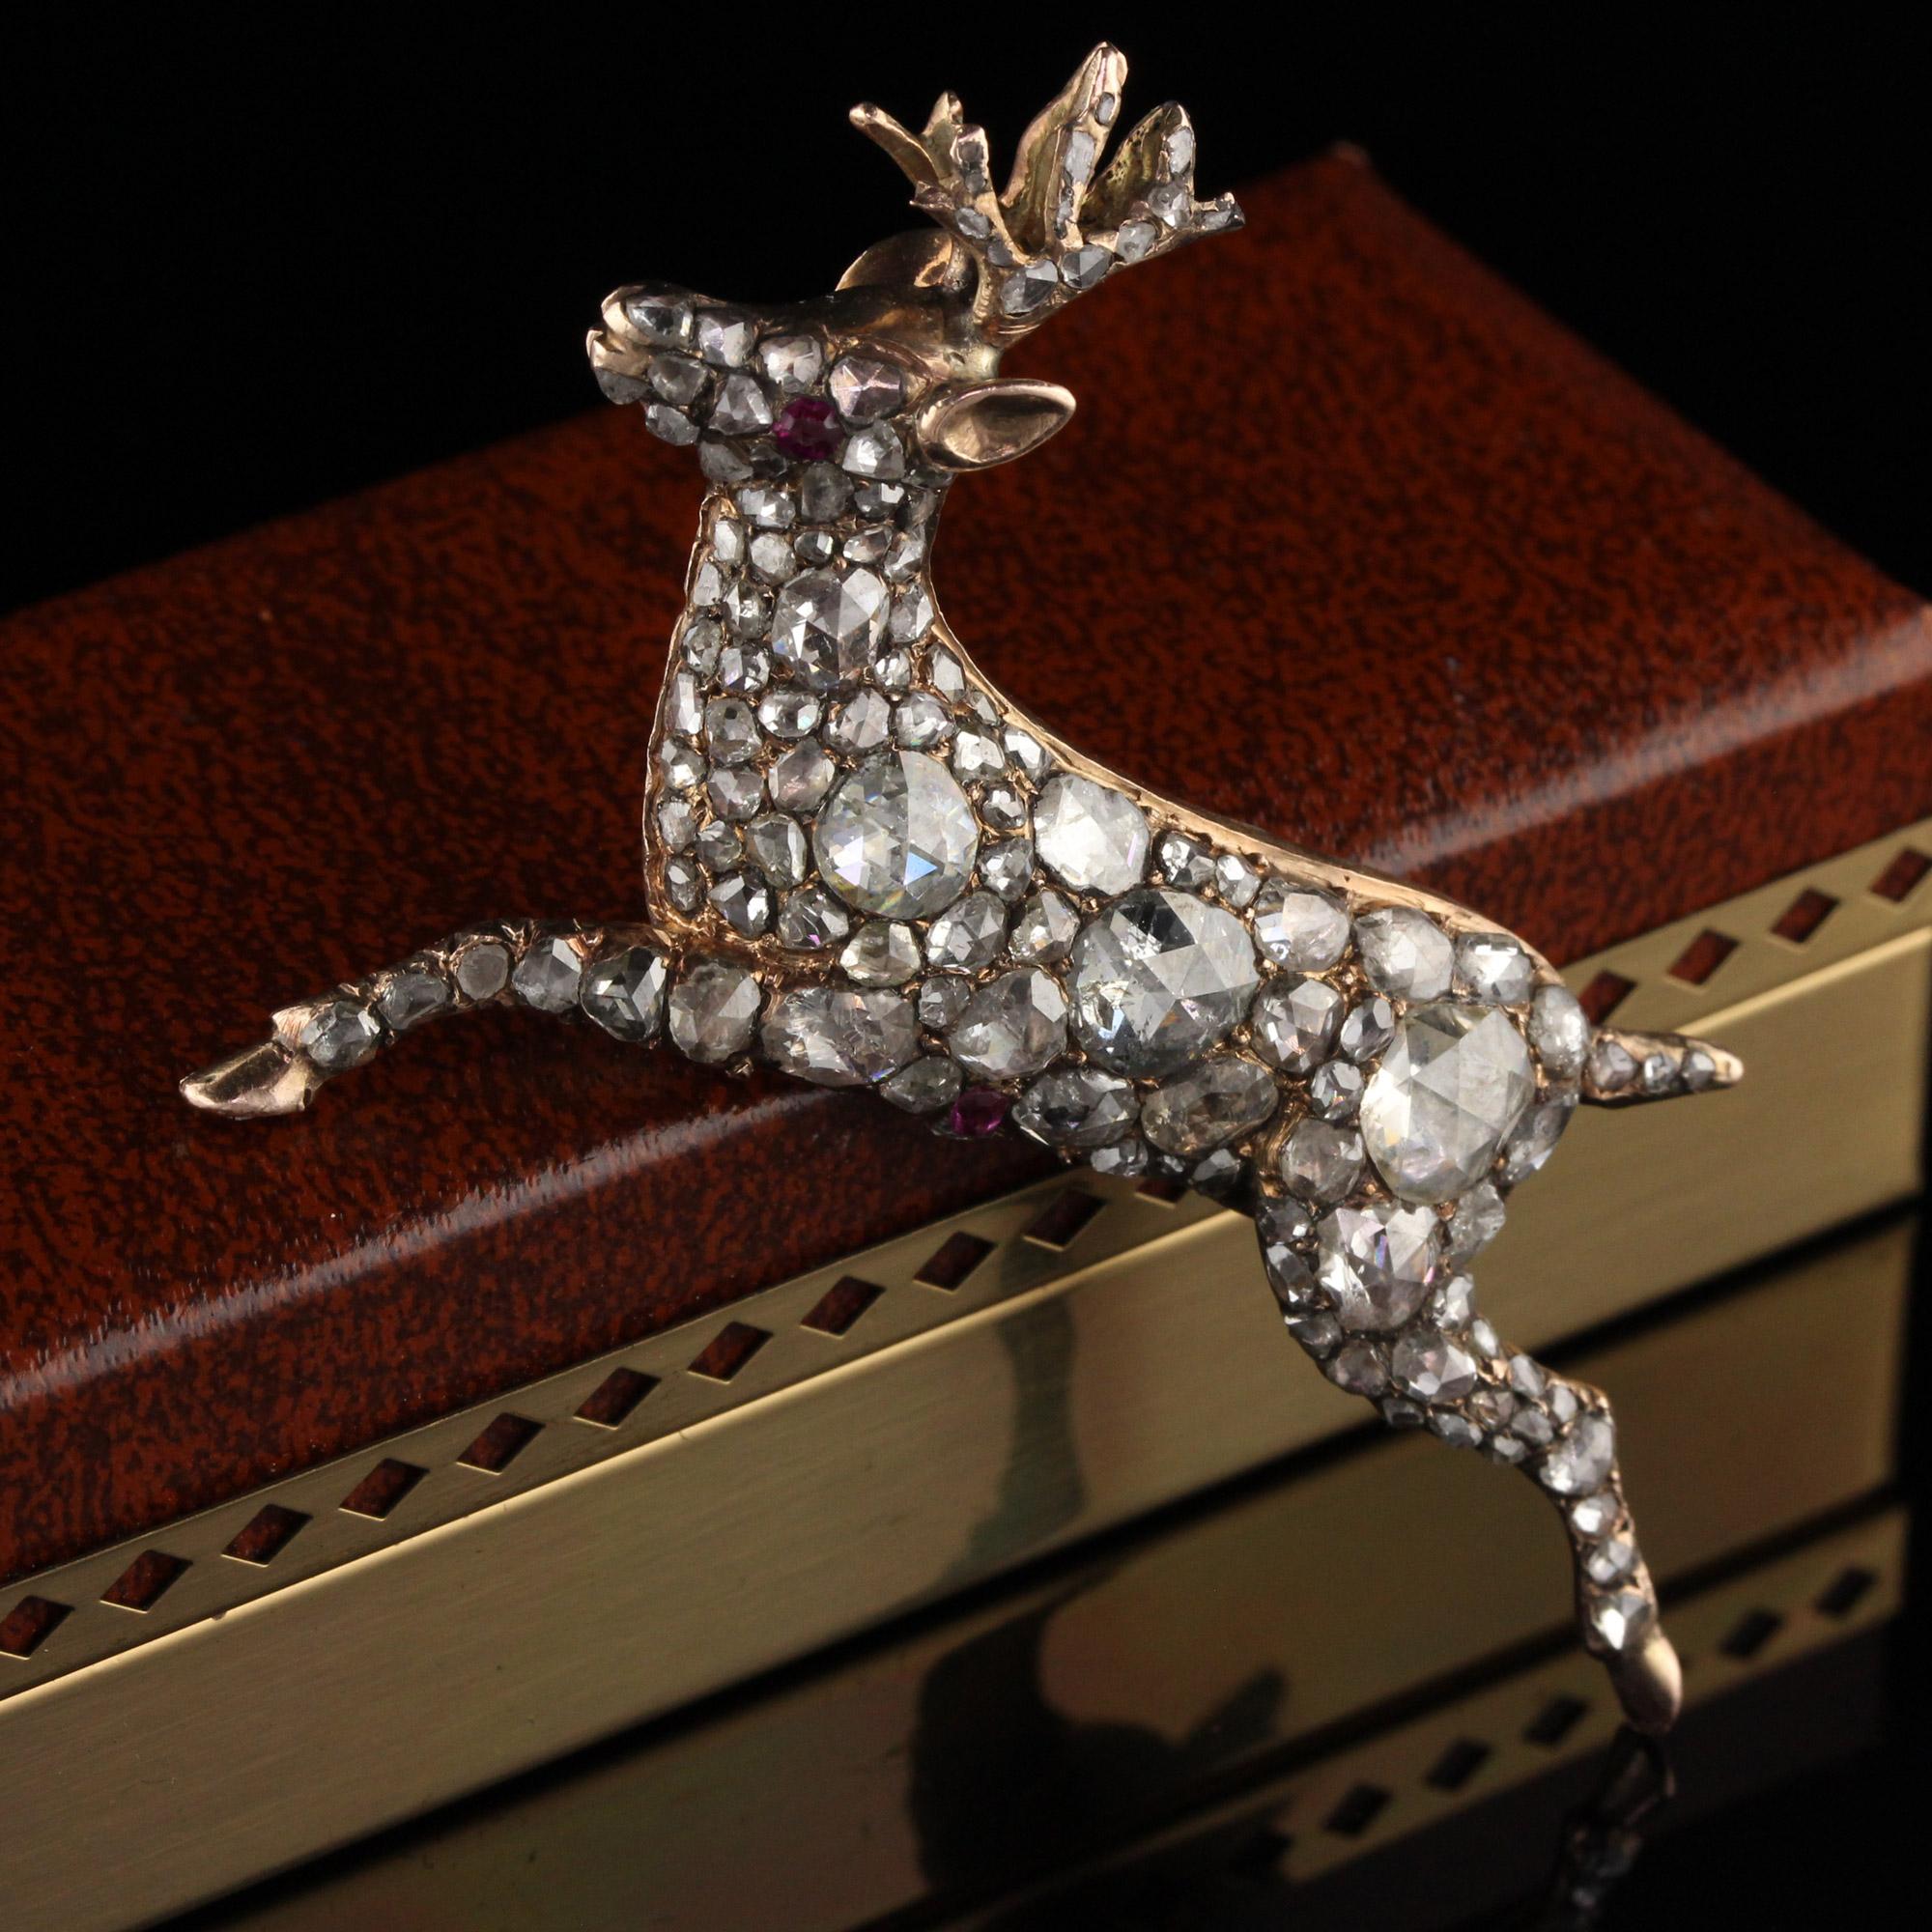 Beautiful Georgian Deer pin with Rose Cut Diamonds. 

Item #P0096

Metal: 12K Rose Gold

Weight: 14.6 Grams

Total Diamond Weight: Approximately 6.00 cts

Diamond Color: H-J

Diamond Clarity: VS2

Measurements: 53.5 mm x 9.8 mm